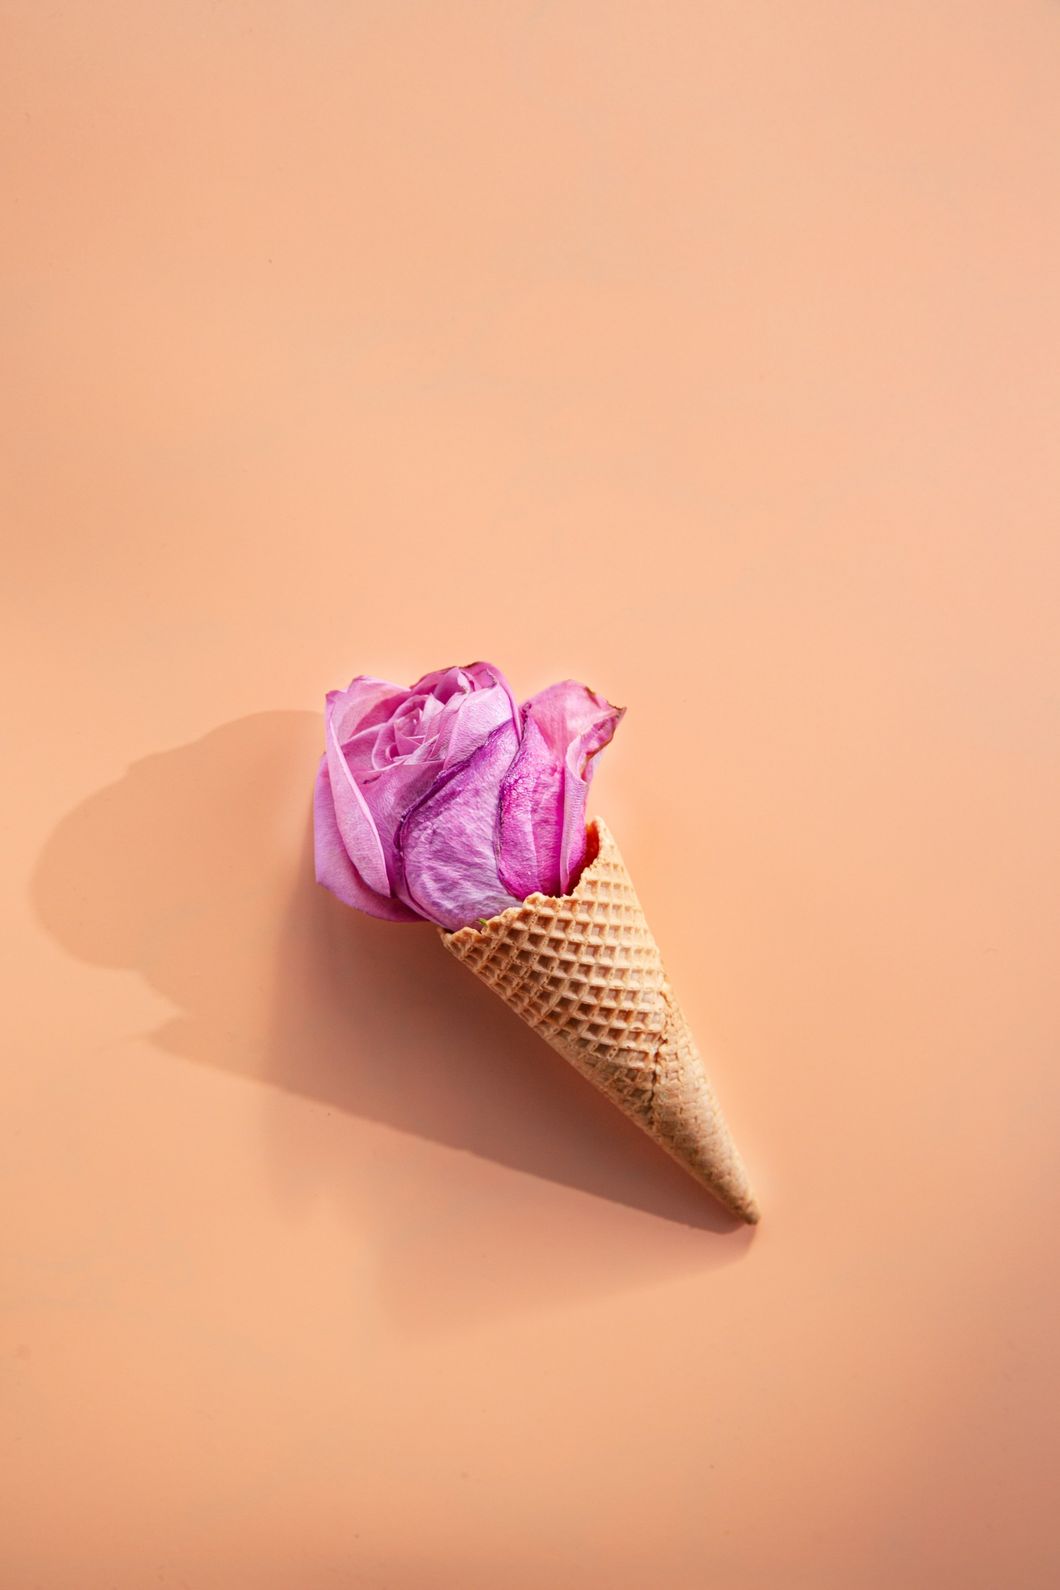 Rose flower in a waffel icecream cone on a orange backround